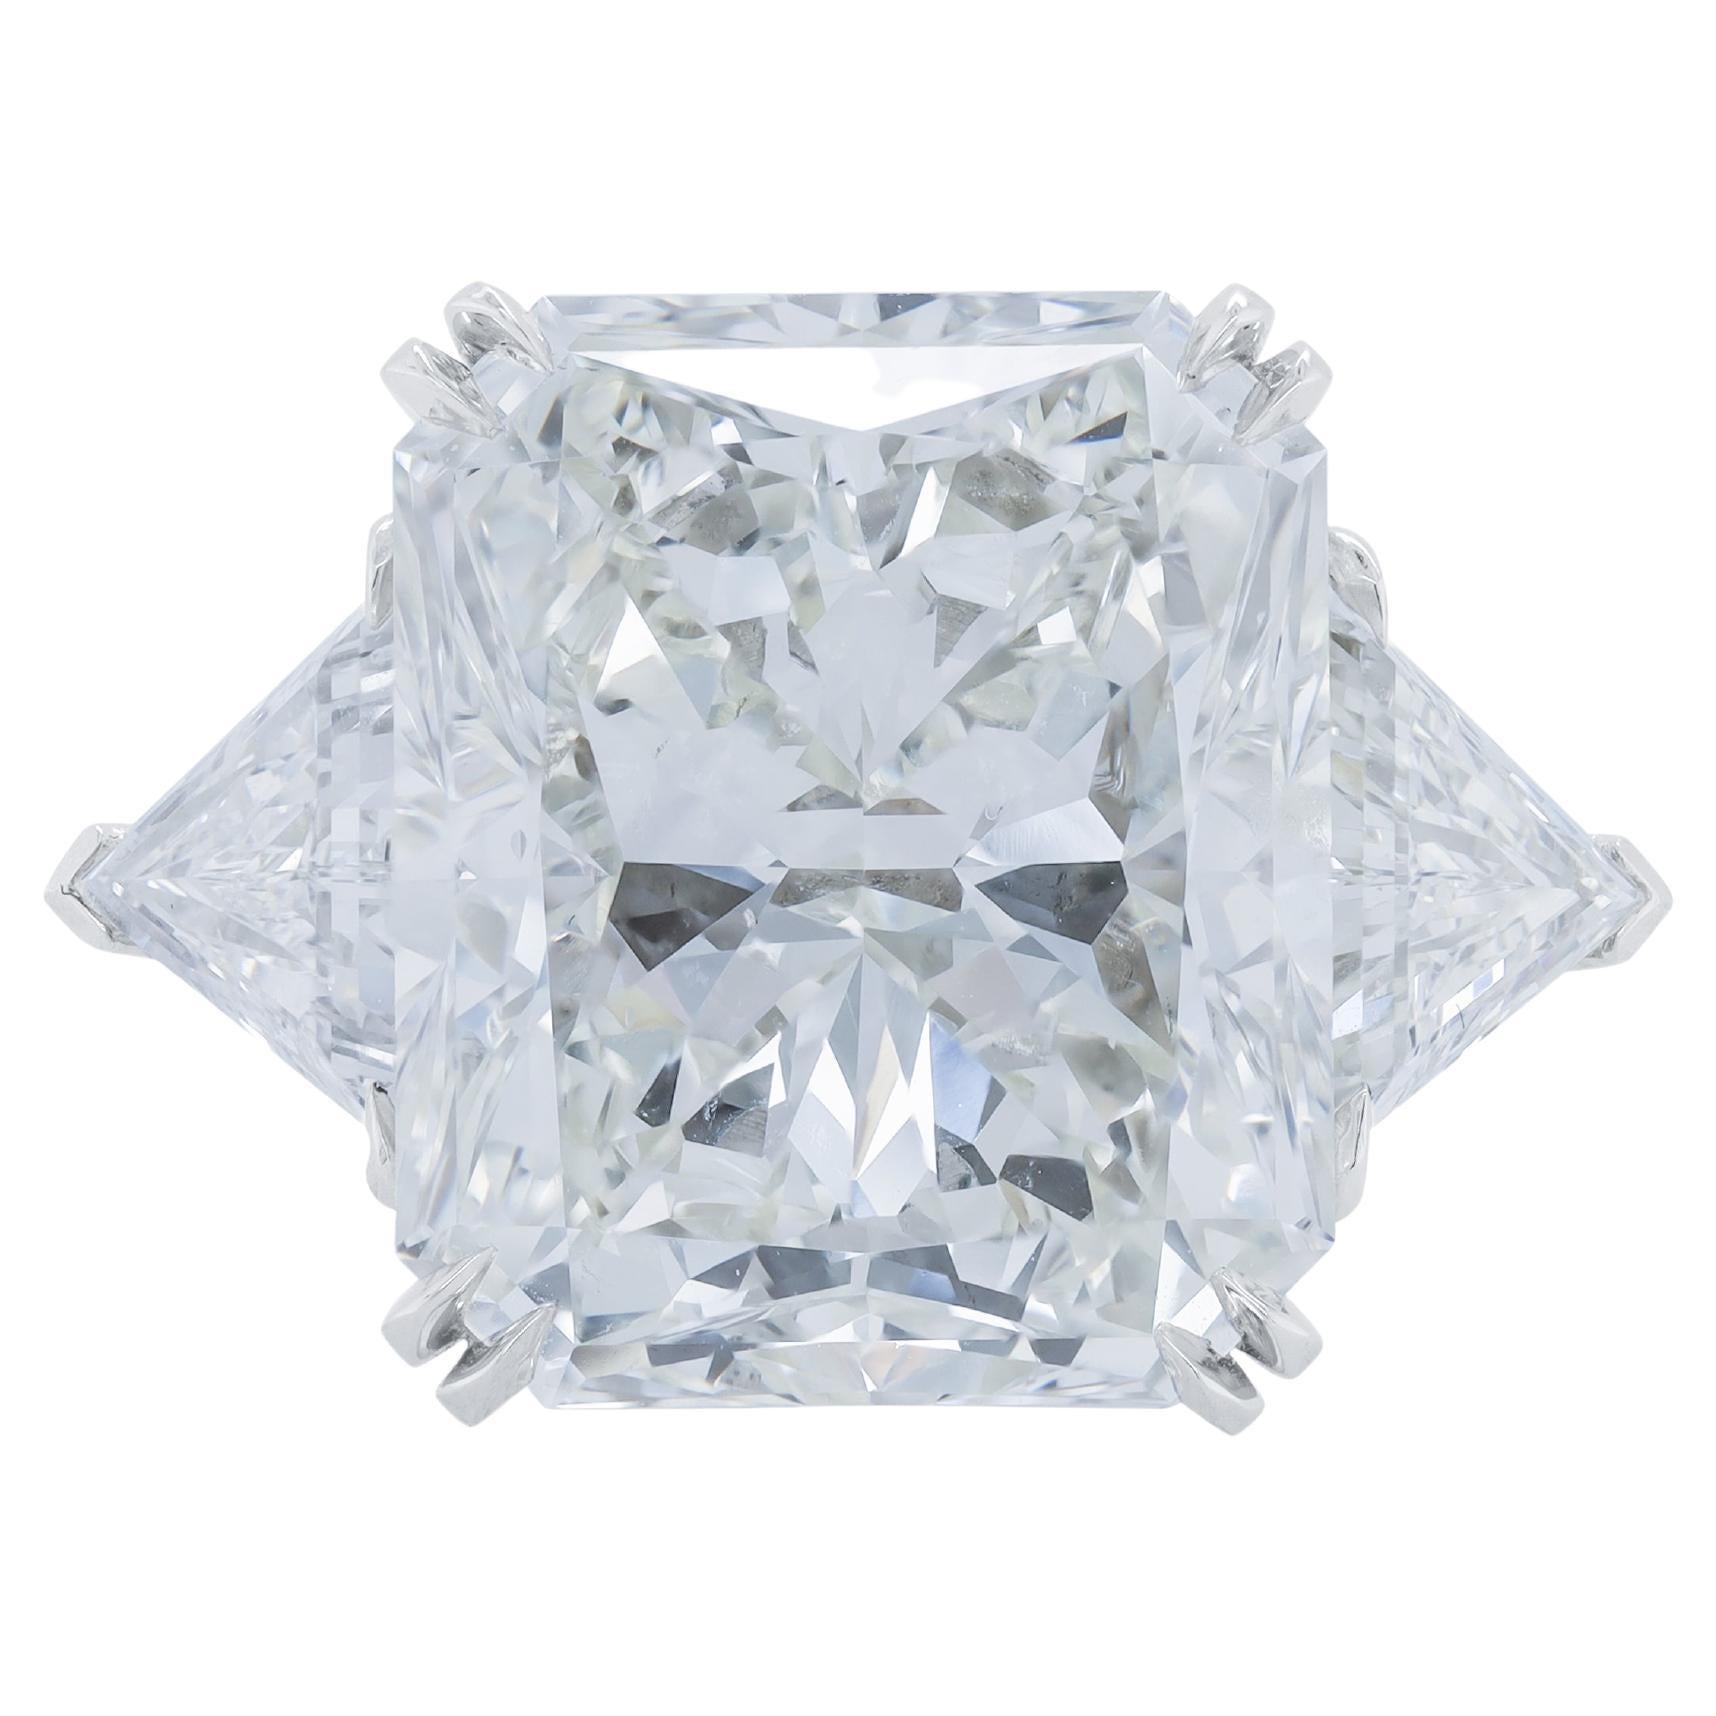 Diana M. Platinum engagement ring featuring a center (J-VS2) 18.03 radiant cut